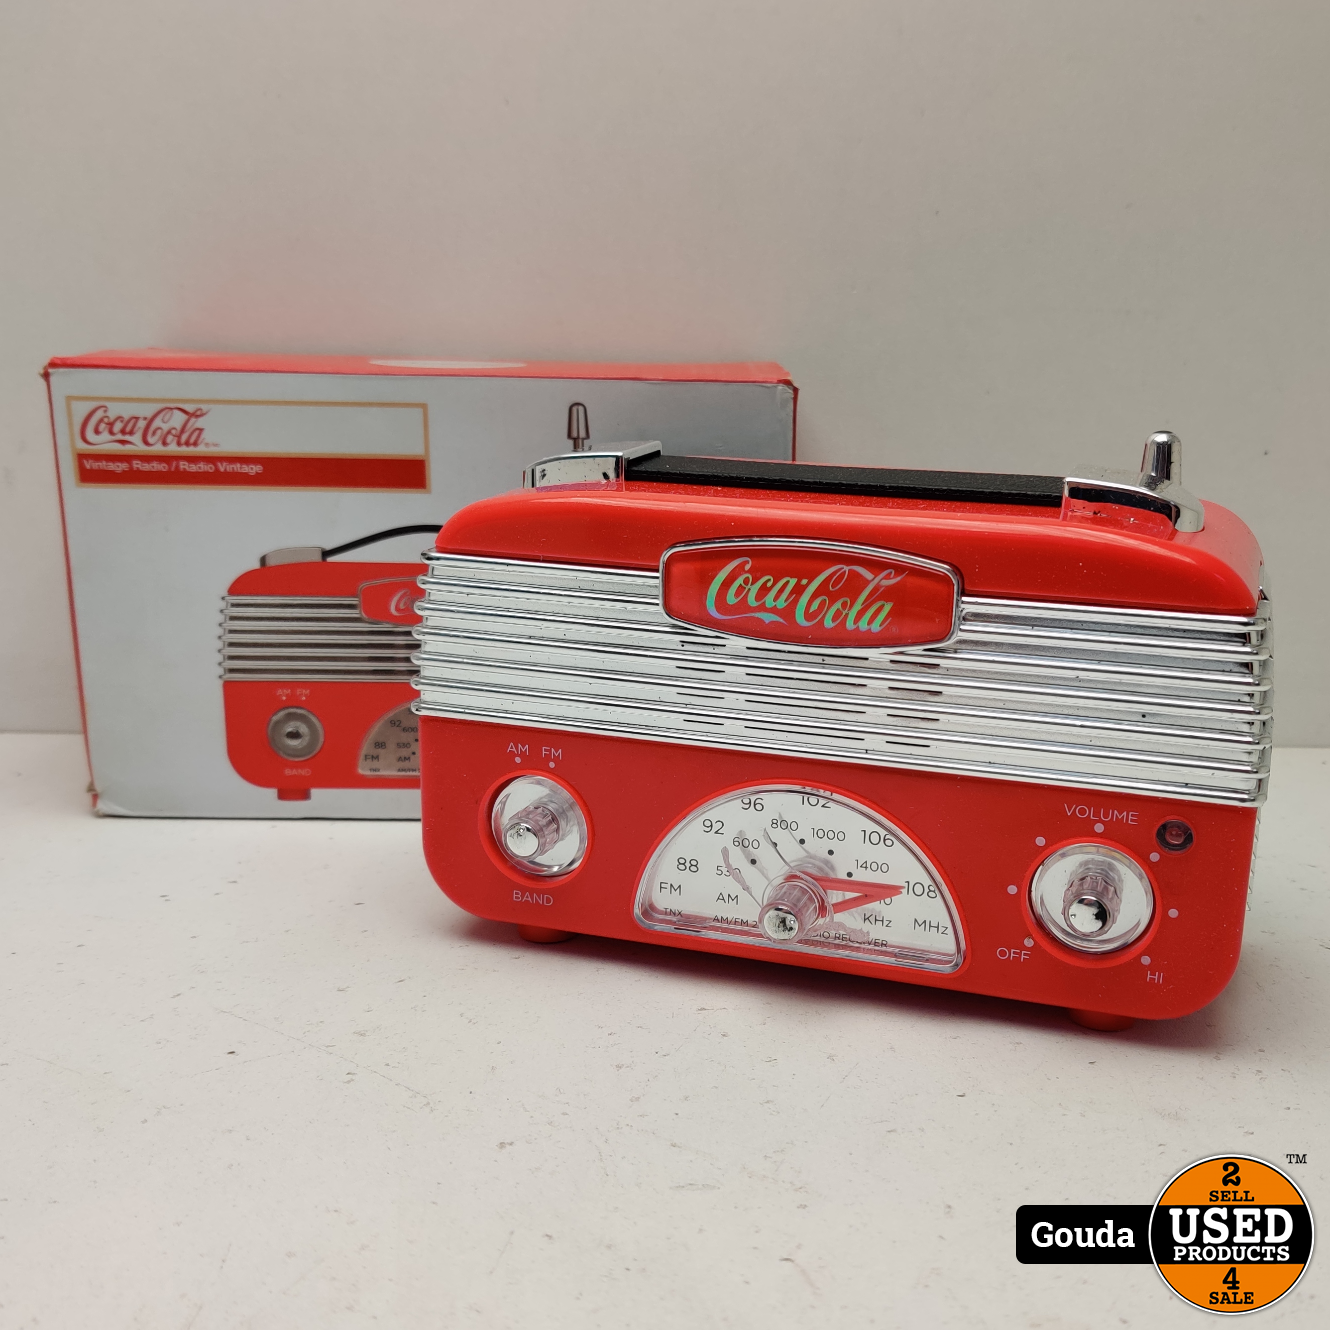 Kreta baas Moderniseren CocaCola vintage radio - Used Products Gouda